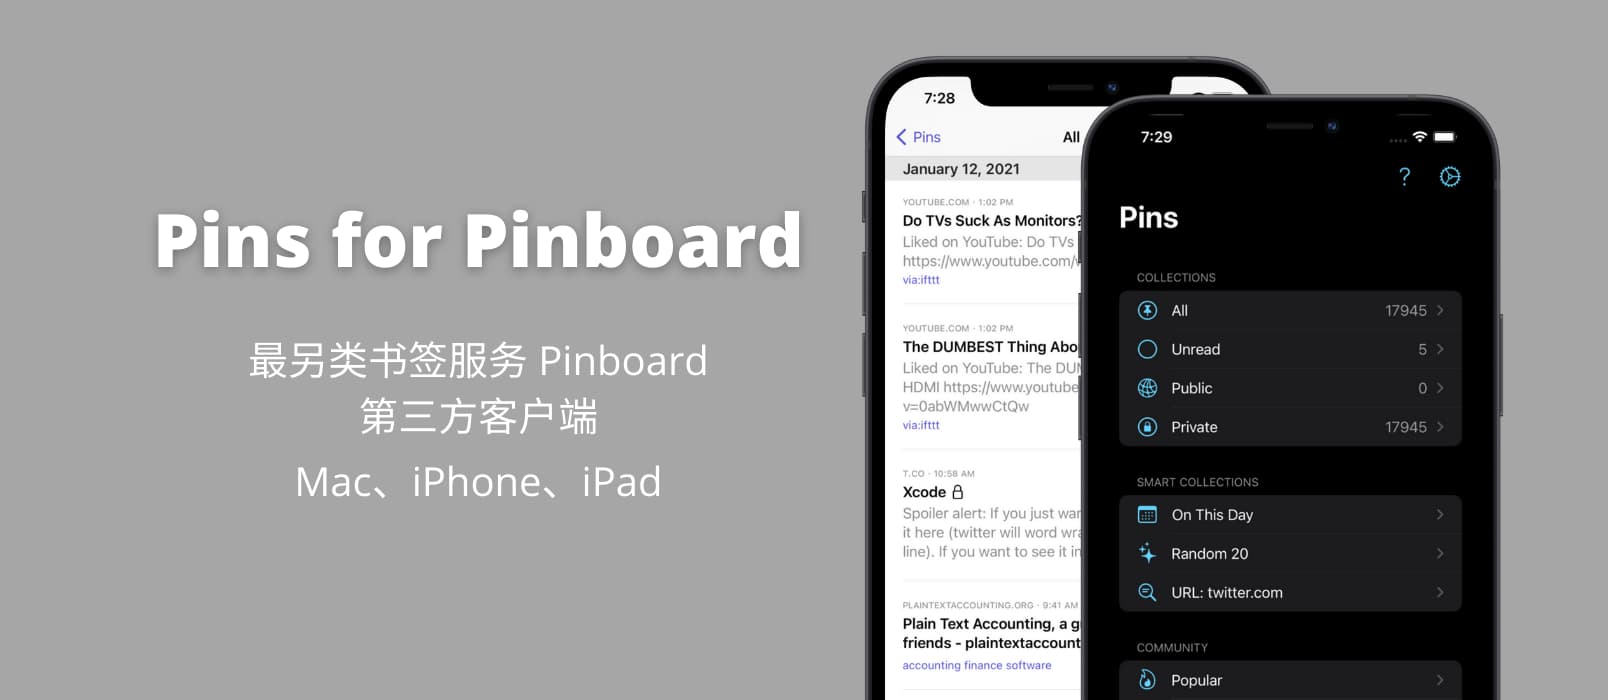 Pins for Pinboard - 现代化、功能完善的书签服务 Pinboard 第三方客户端[macOS/iOS]